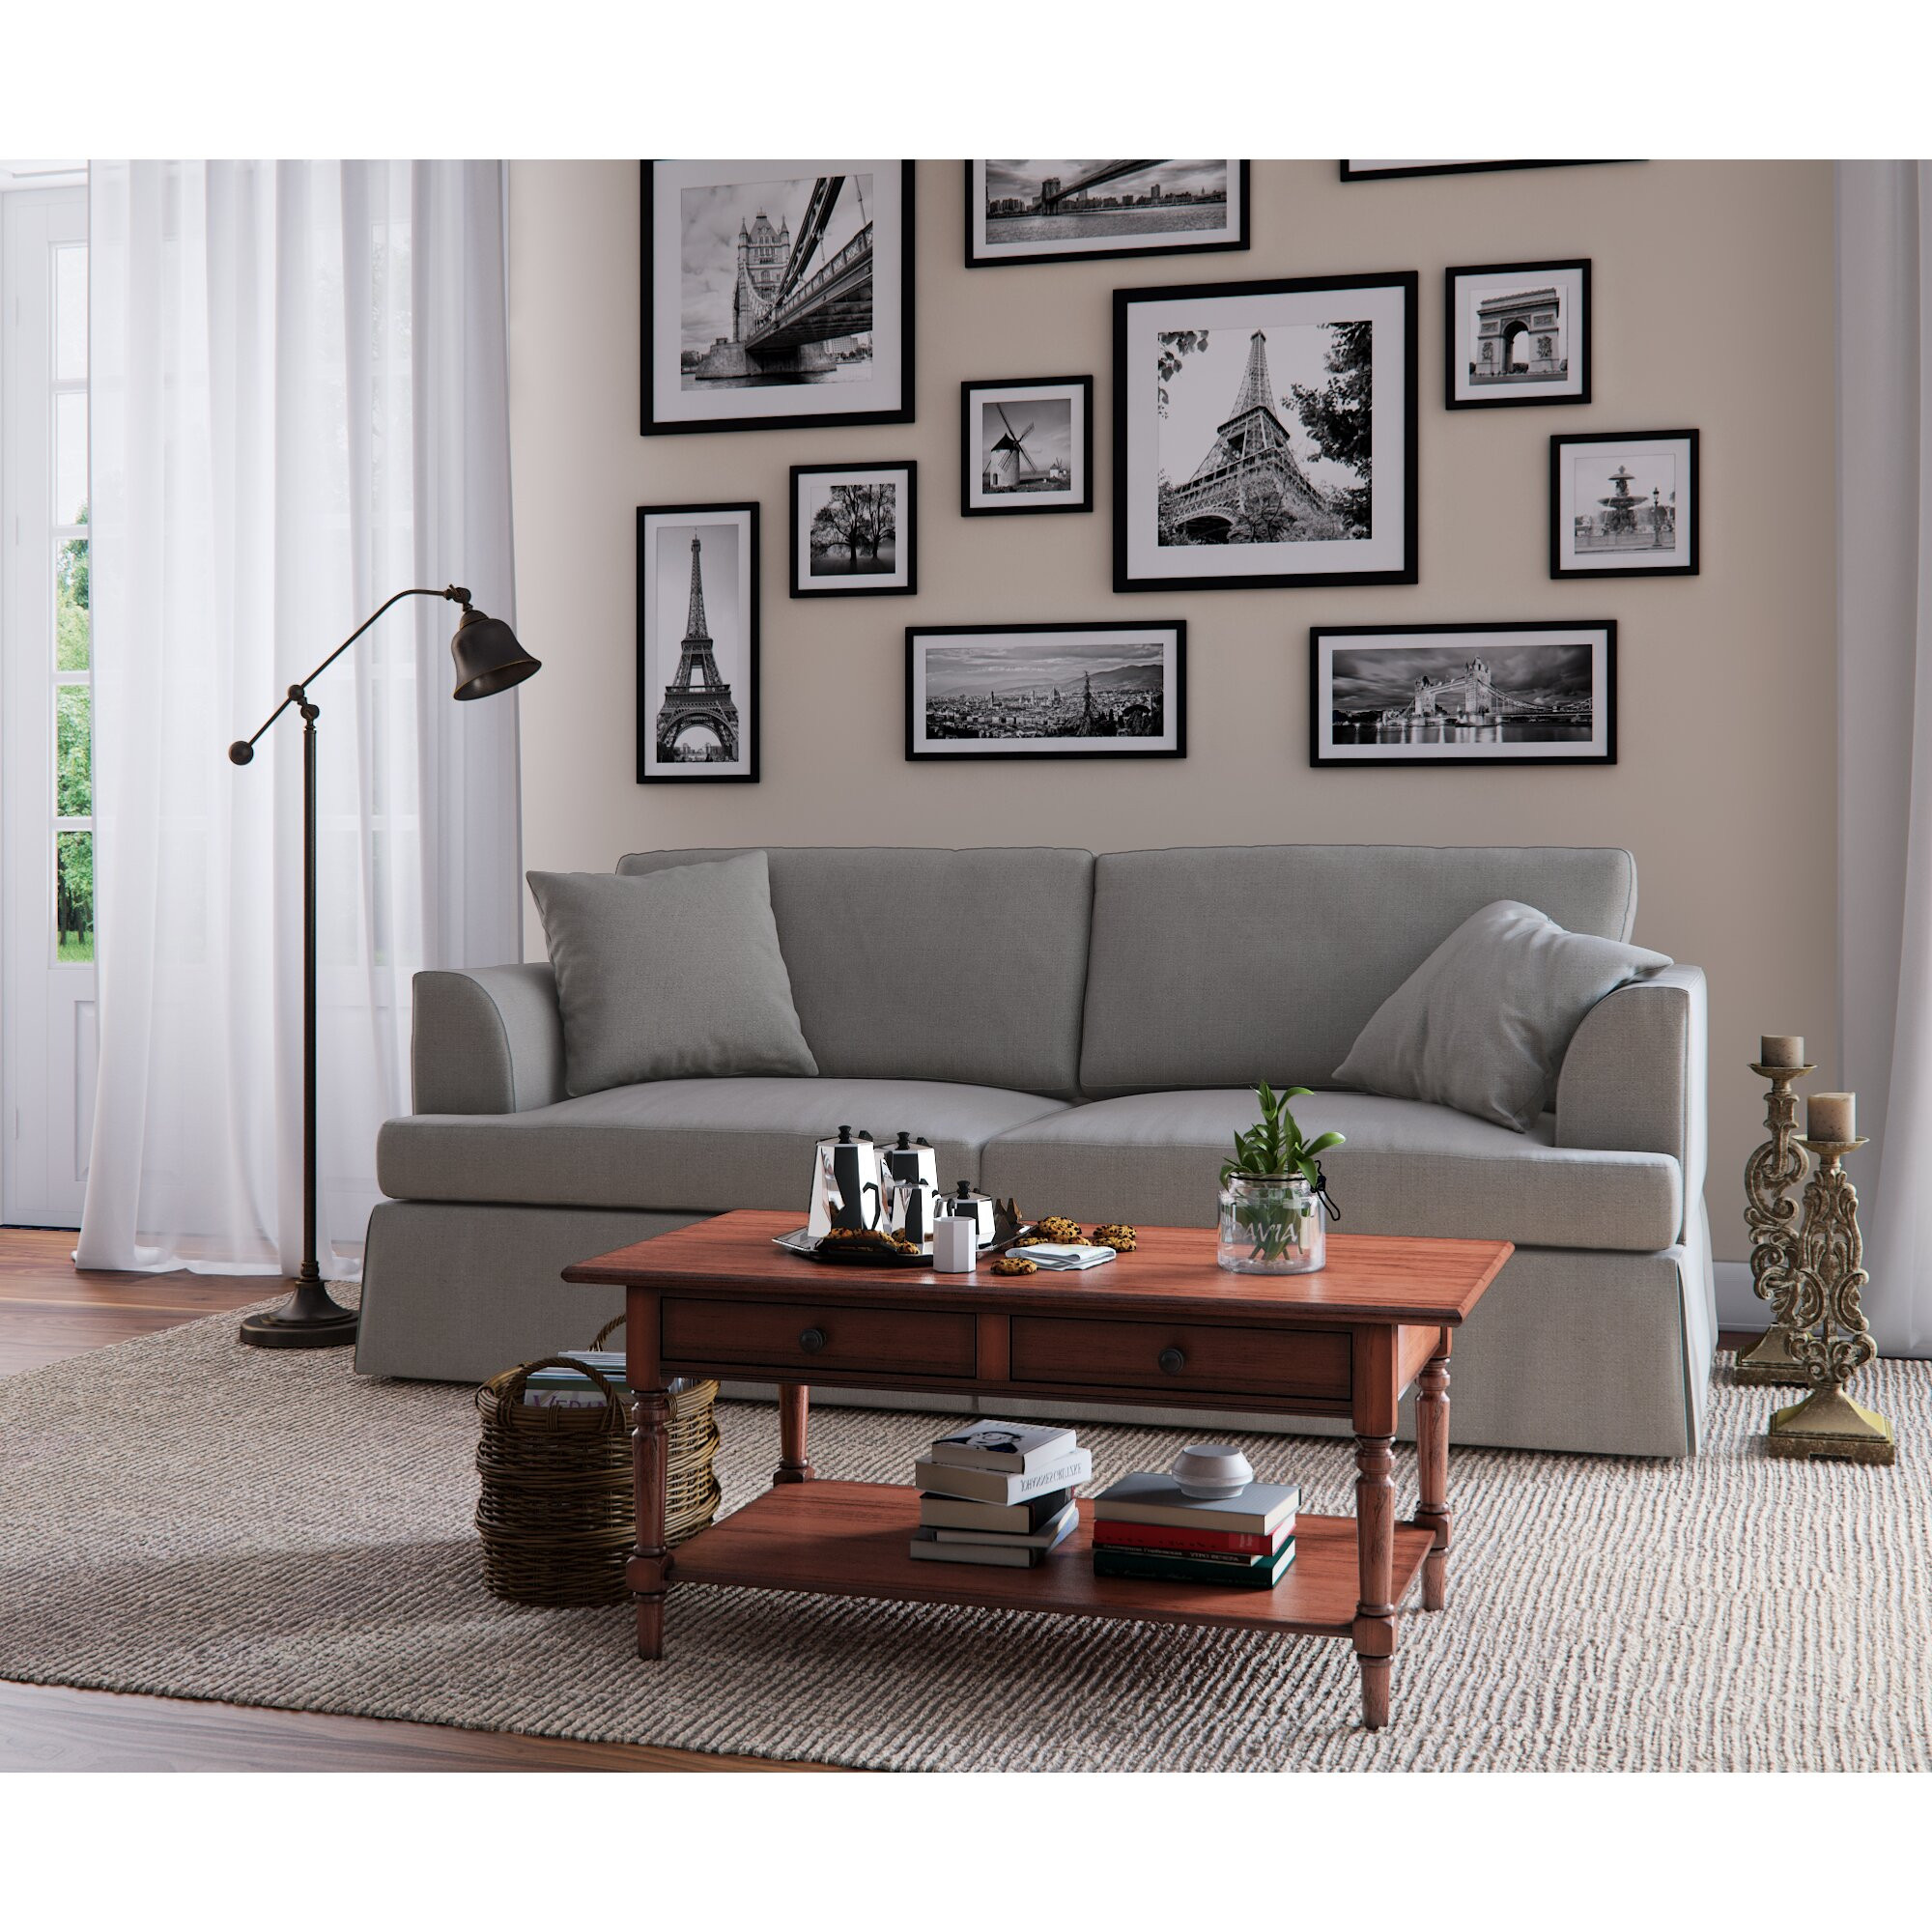 Wayfair Chairs Living Room
 Wayfair Custom Upholstery Carly Sofa & Reviews